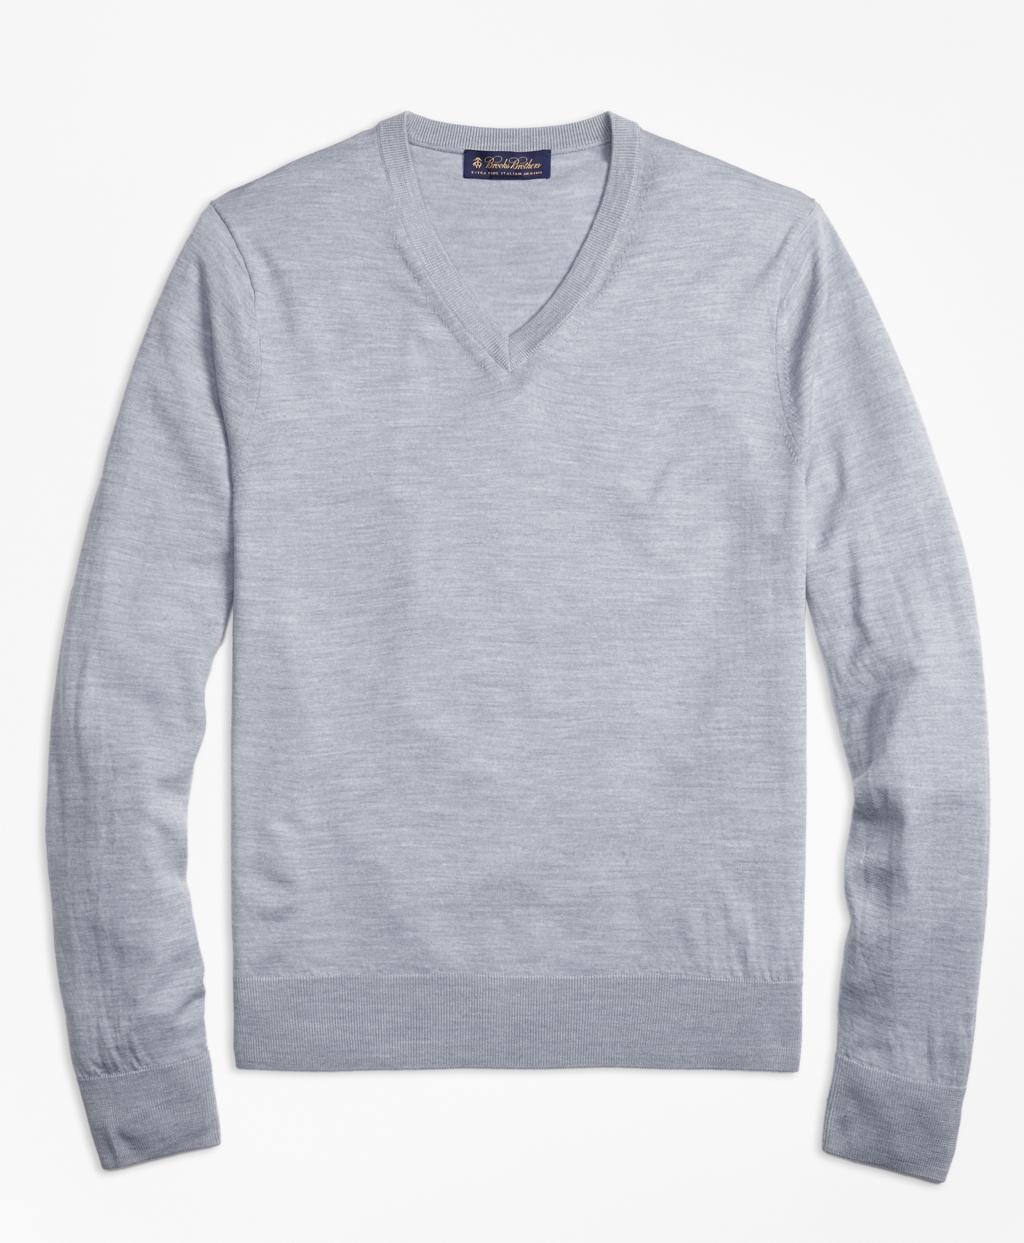 Lyst - Brooks Brothers Lightweight Merino Wool V-neck Sweater in Gray ...